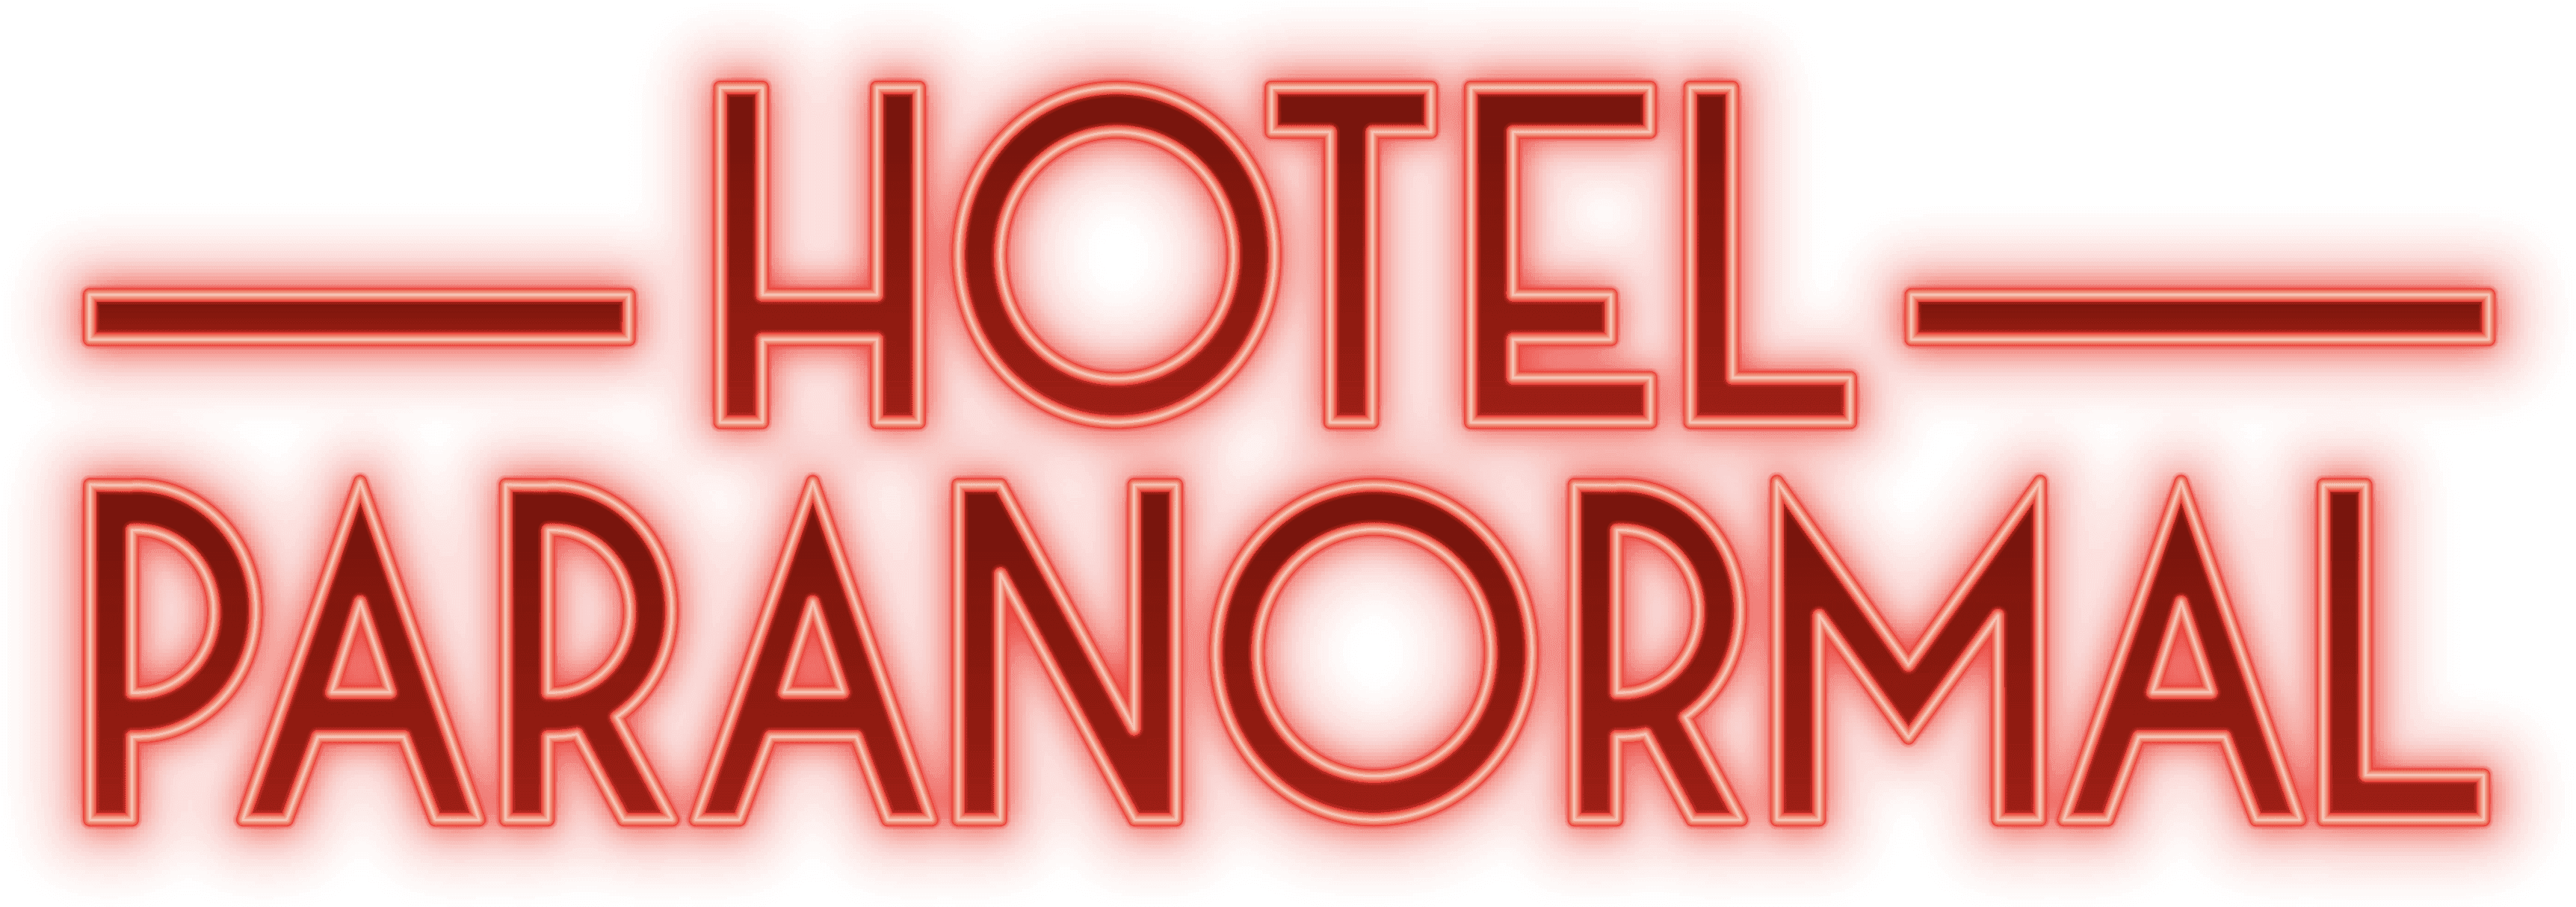 Hotel Paranormal logo